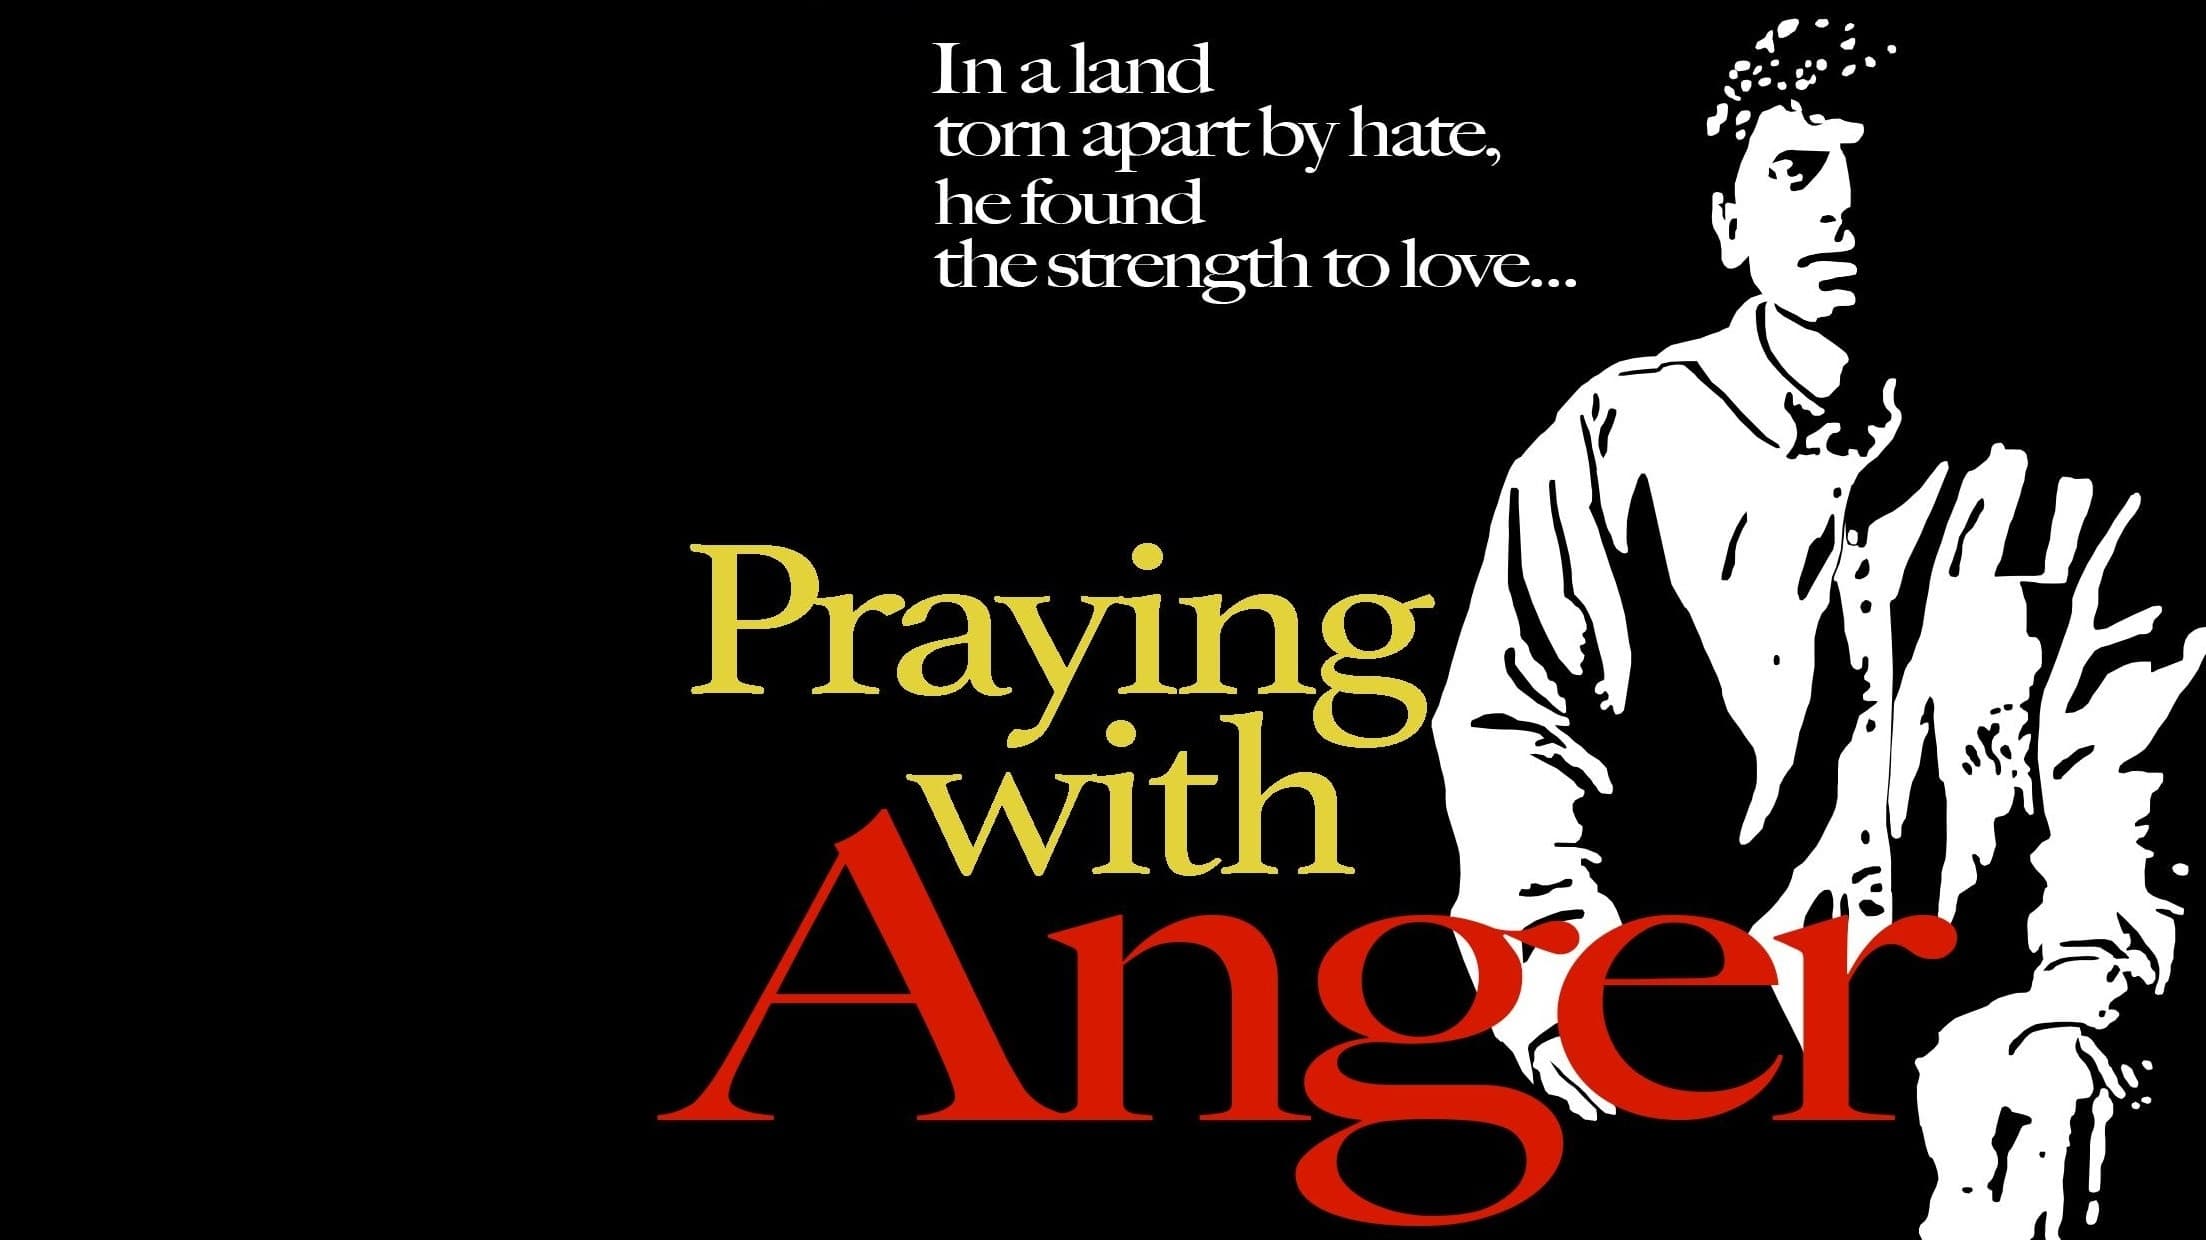 Praying with Anger - film